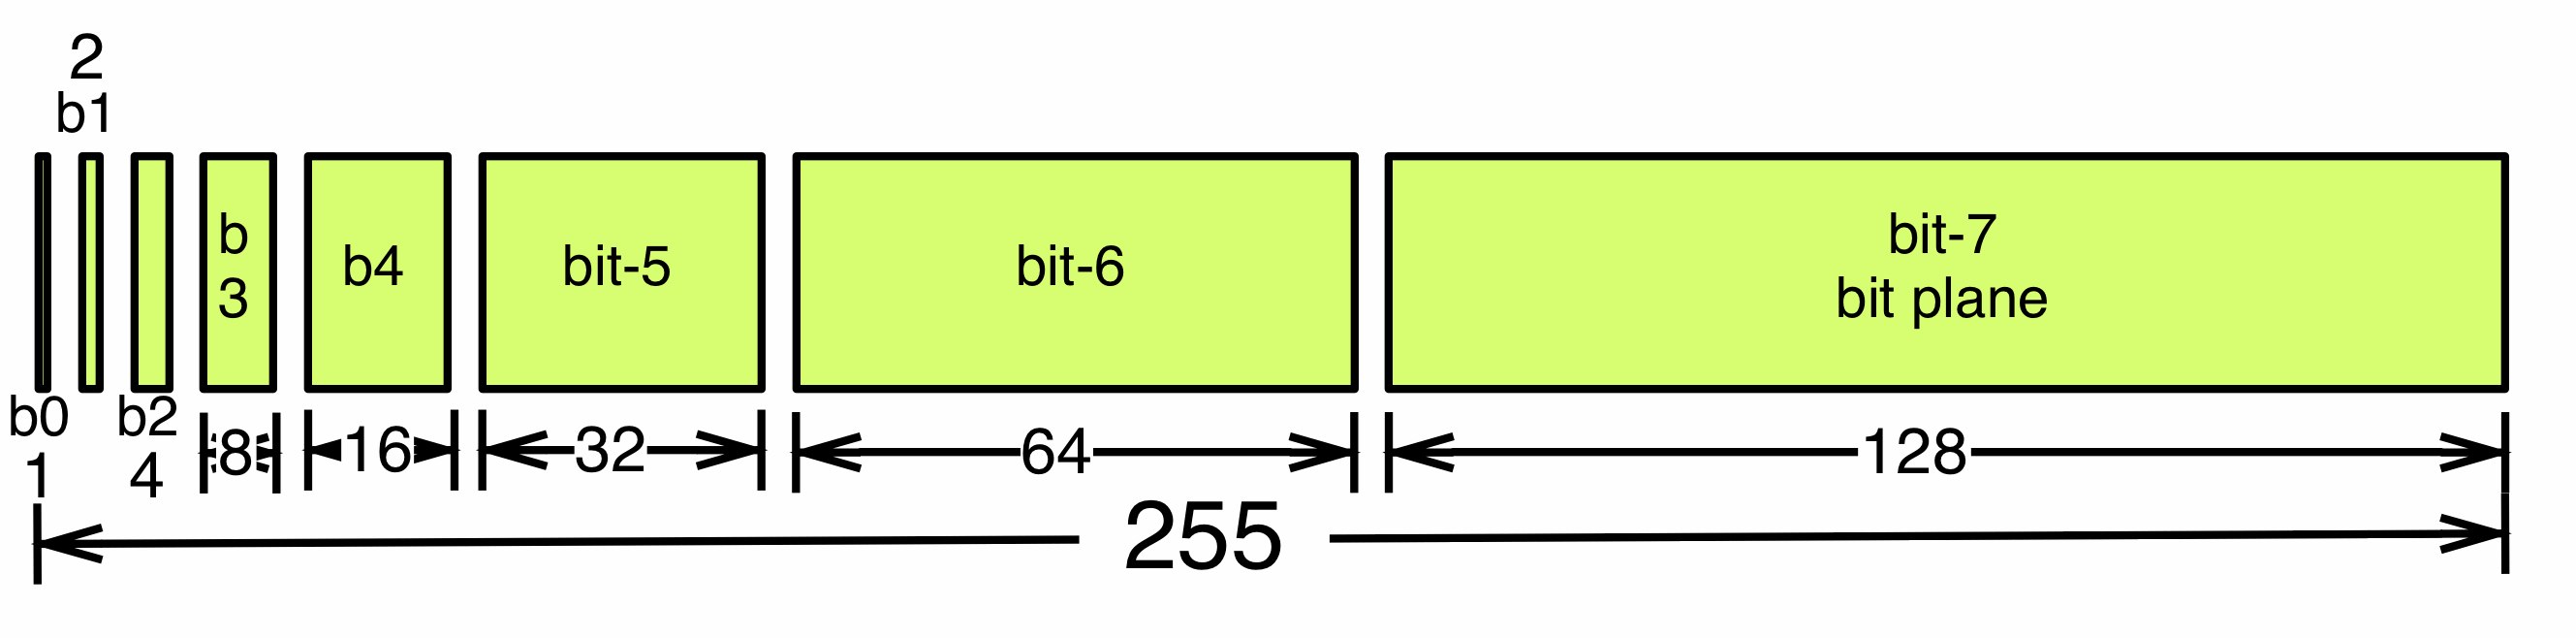 DLPC900 Bit
                    Partition in a Frame for an 8-Bit Monochrome Image